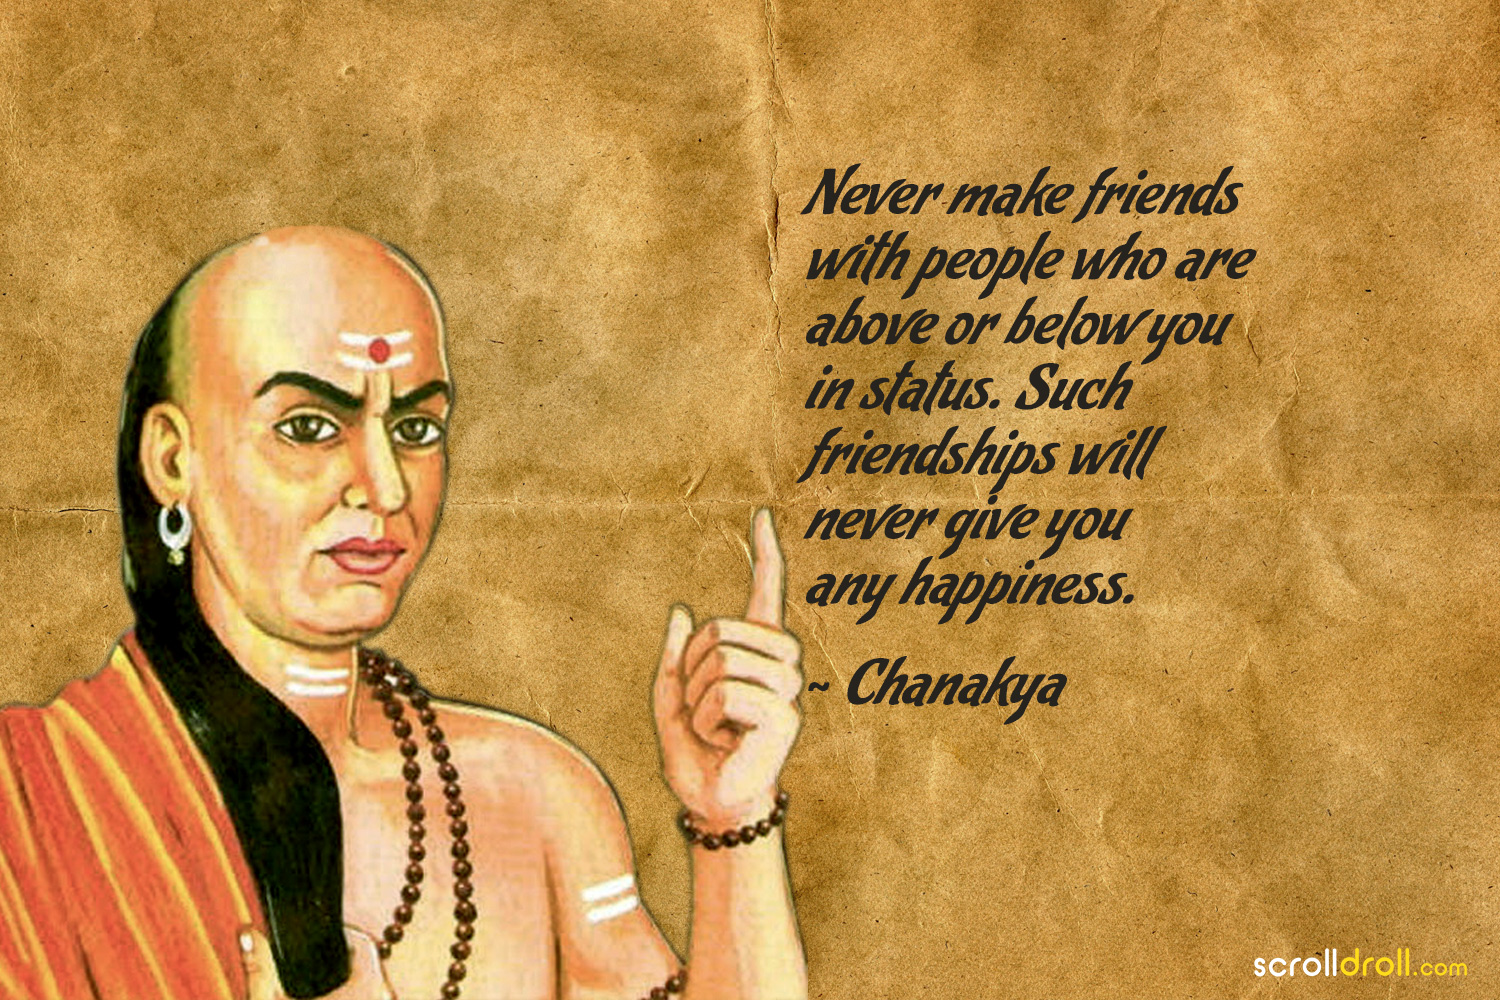 14 Best Chanakya Quotes That'll Teach You His 'Neeti'